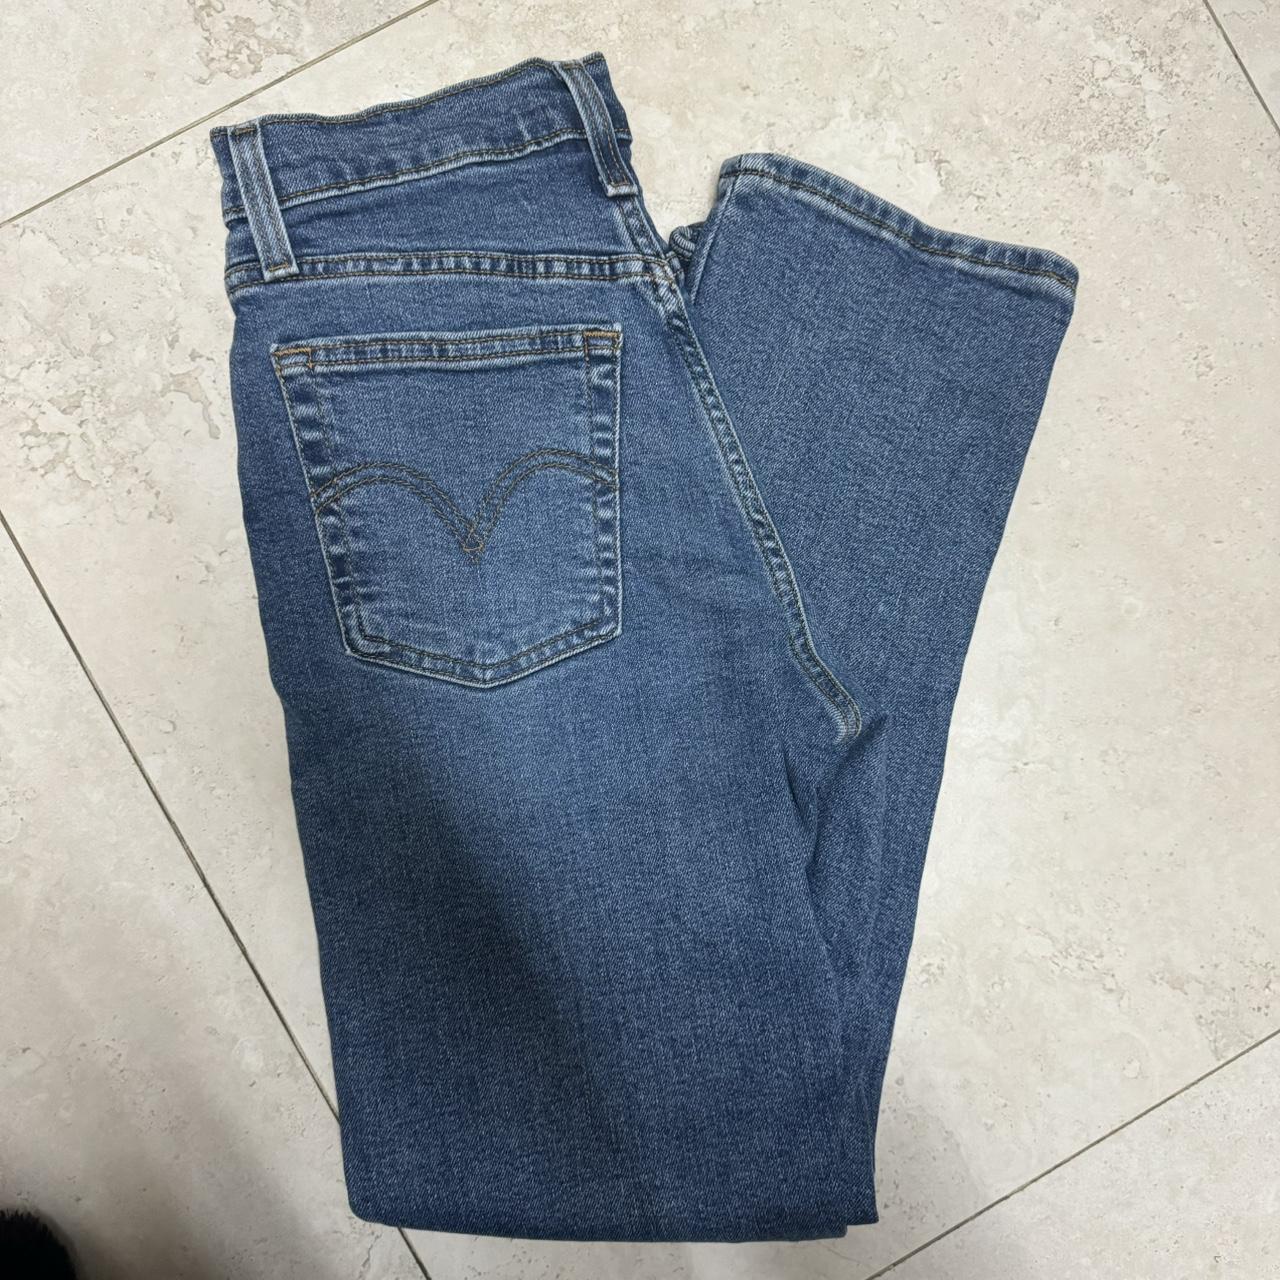 Levis Wedgie straight jeans - Depop